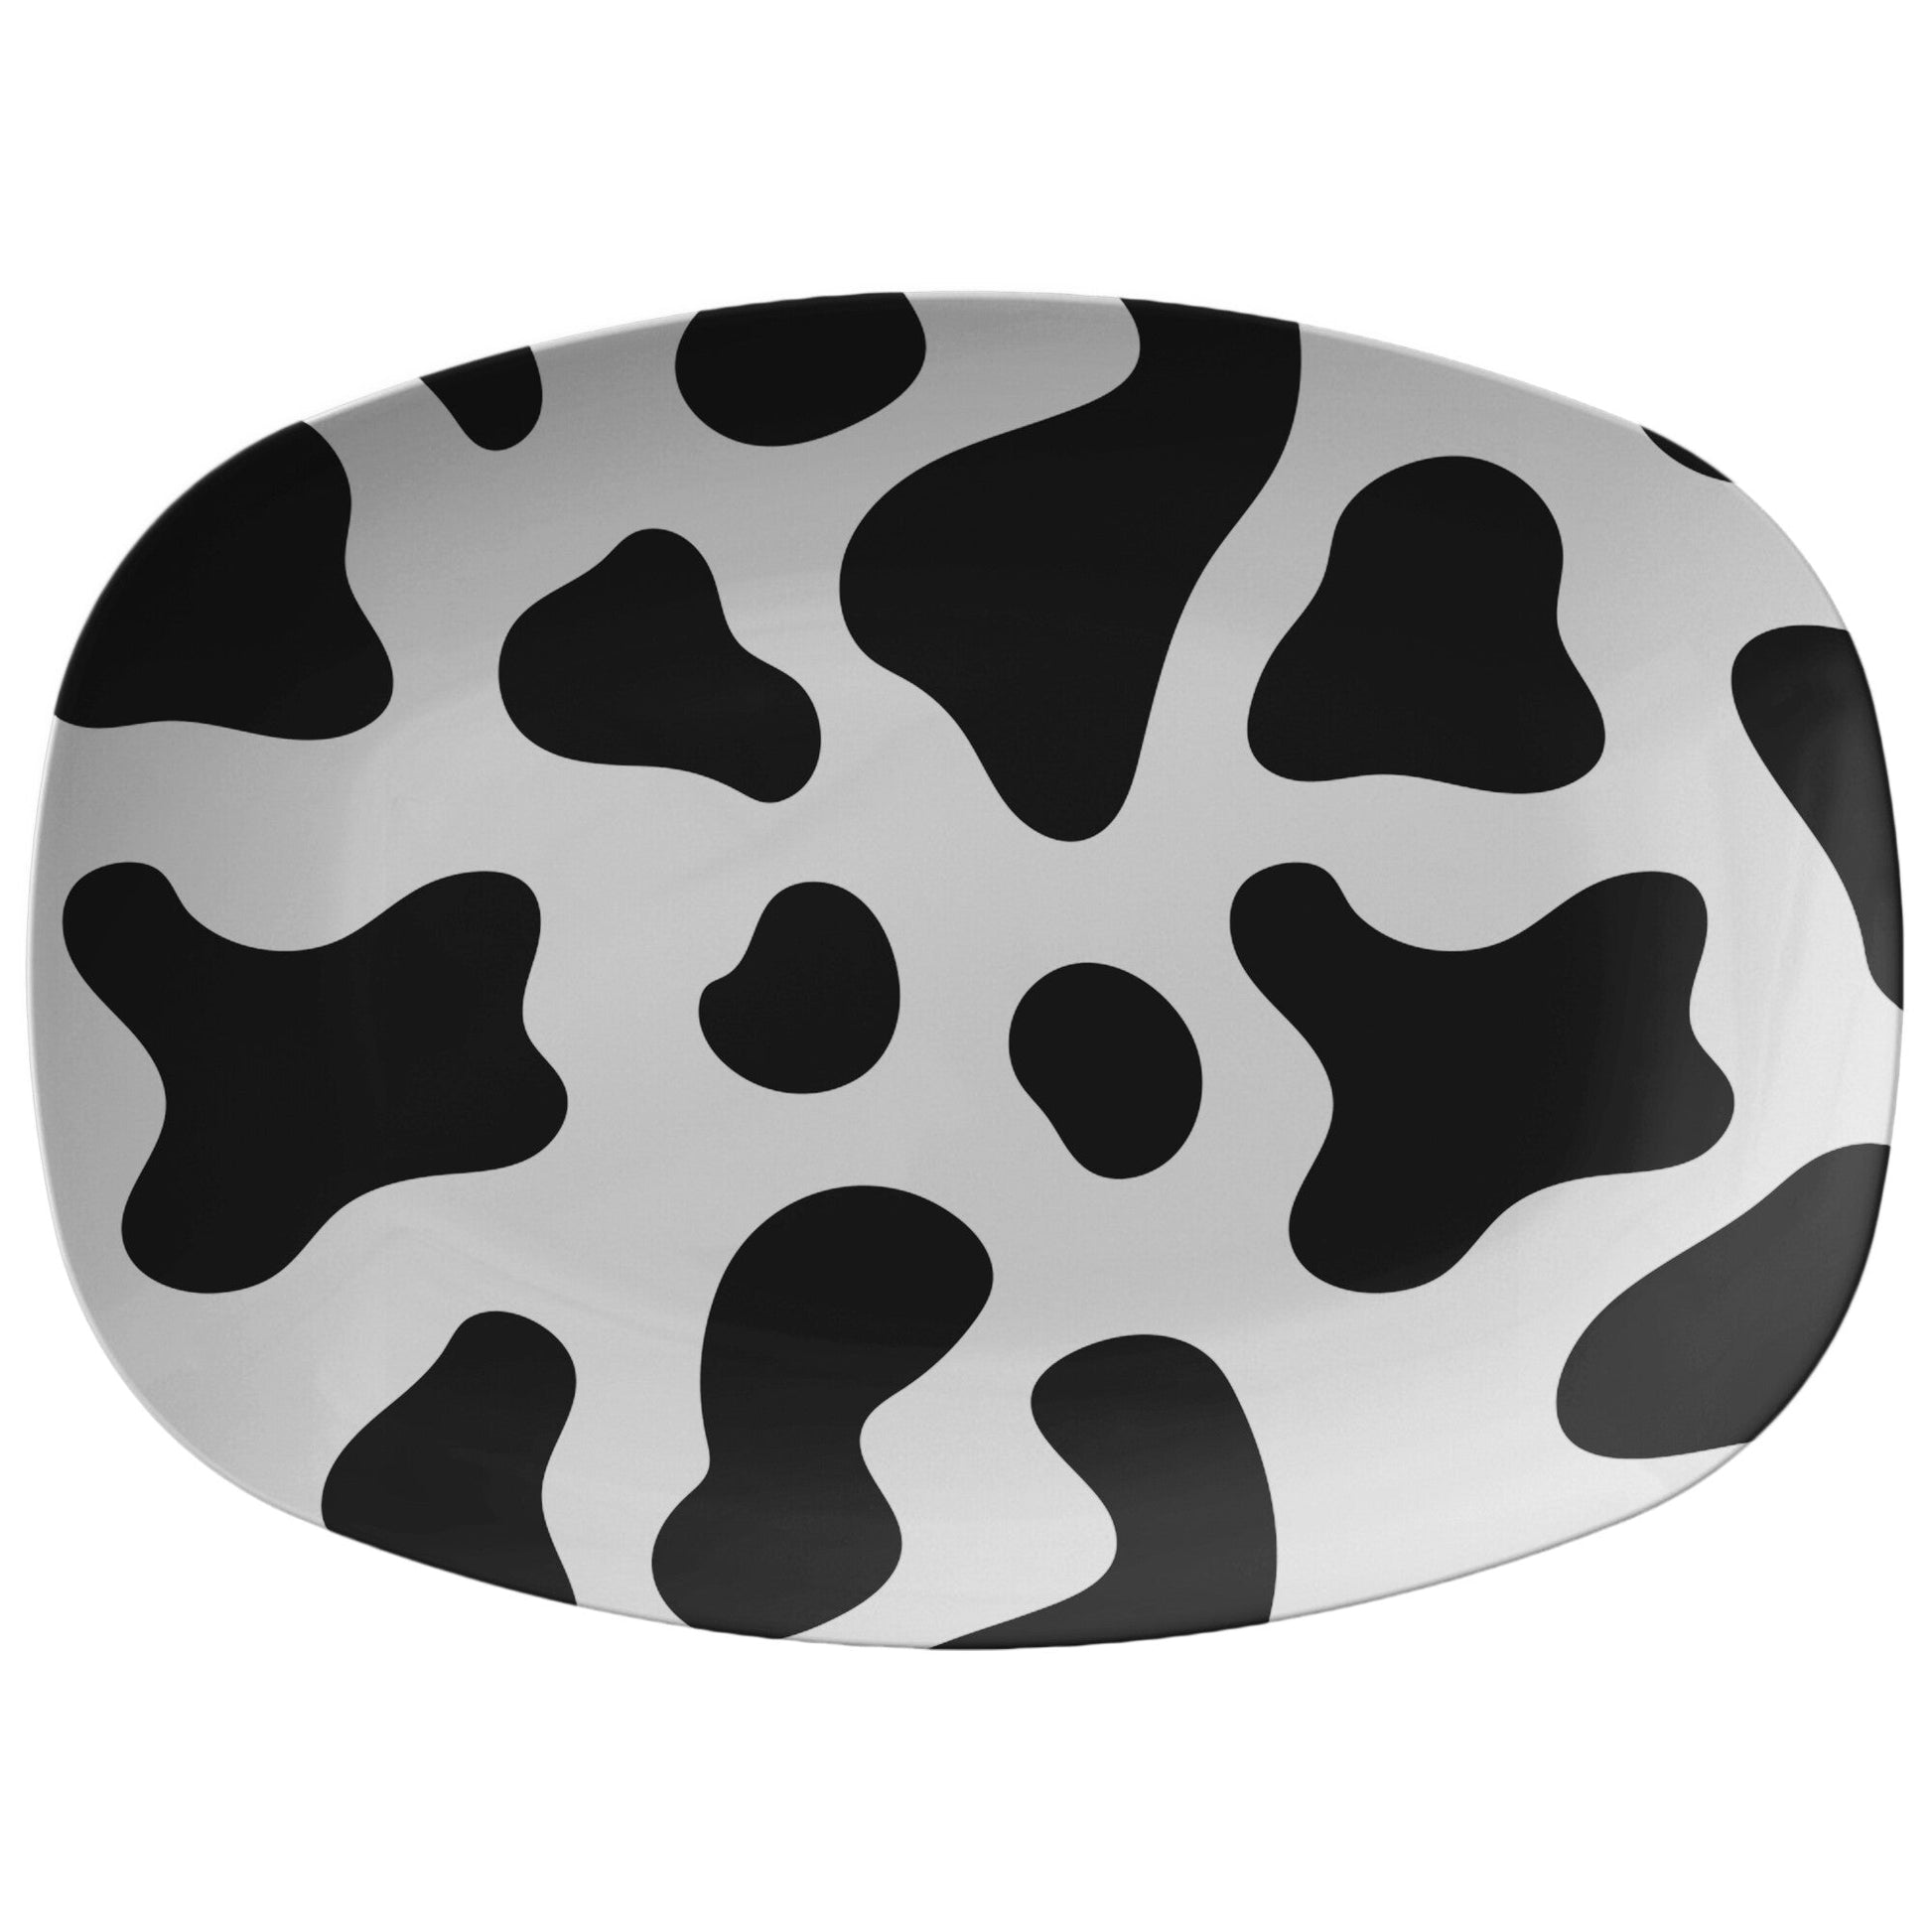 Kate McEnroe New York Serving Platter in Black and White Cow Pattern Serving Platters 9727